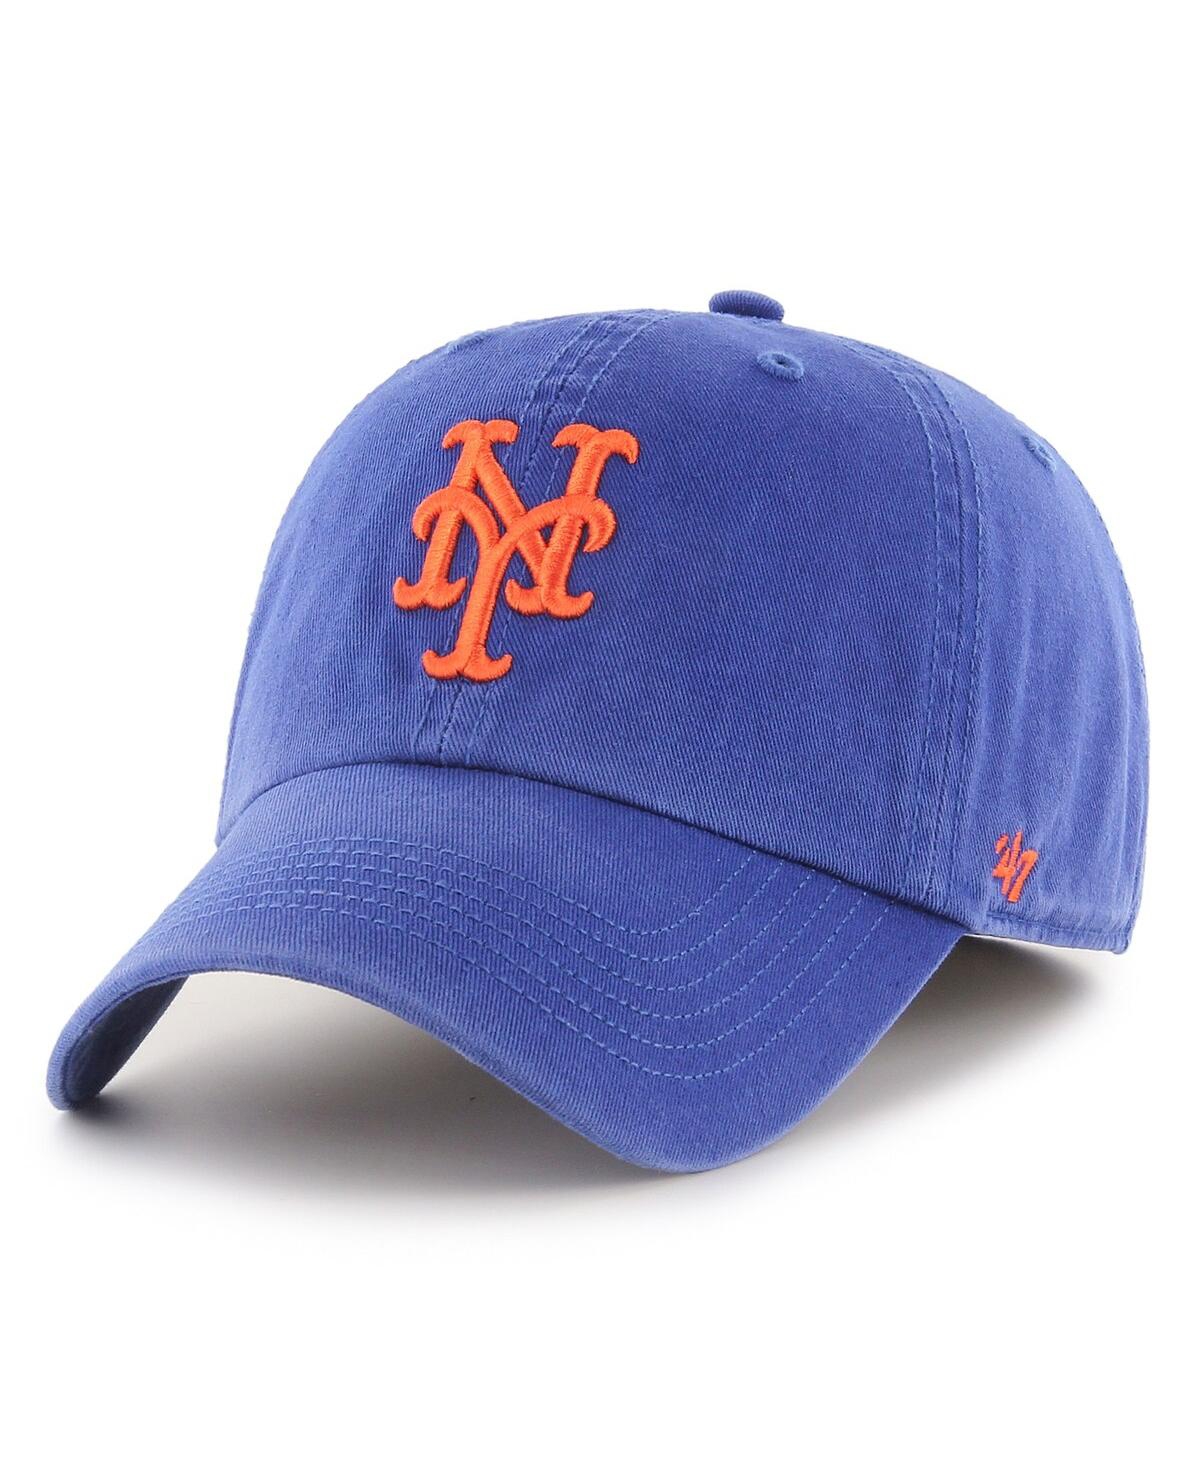 Men's '47 Brand Royal New York Mets Franchise Logo Fitted Hat - Royal